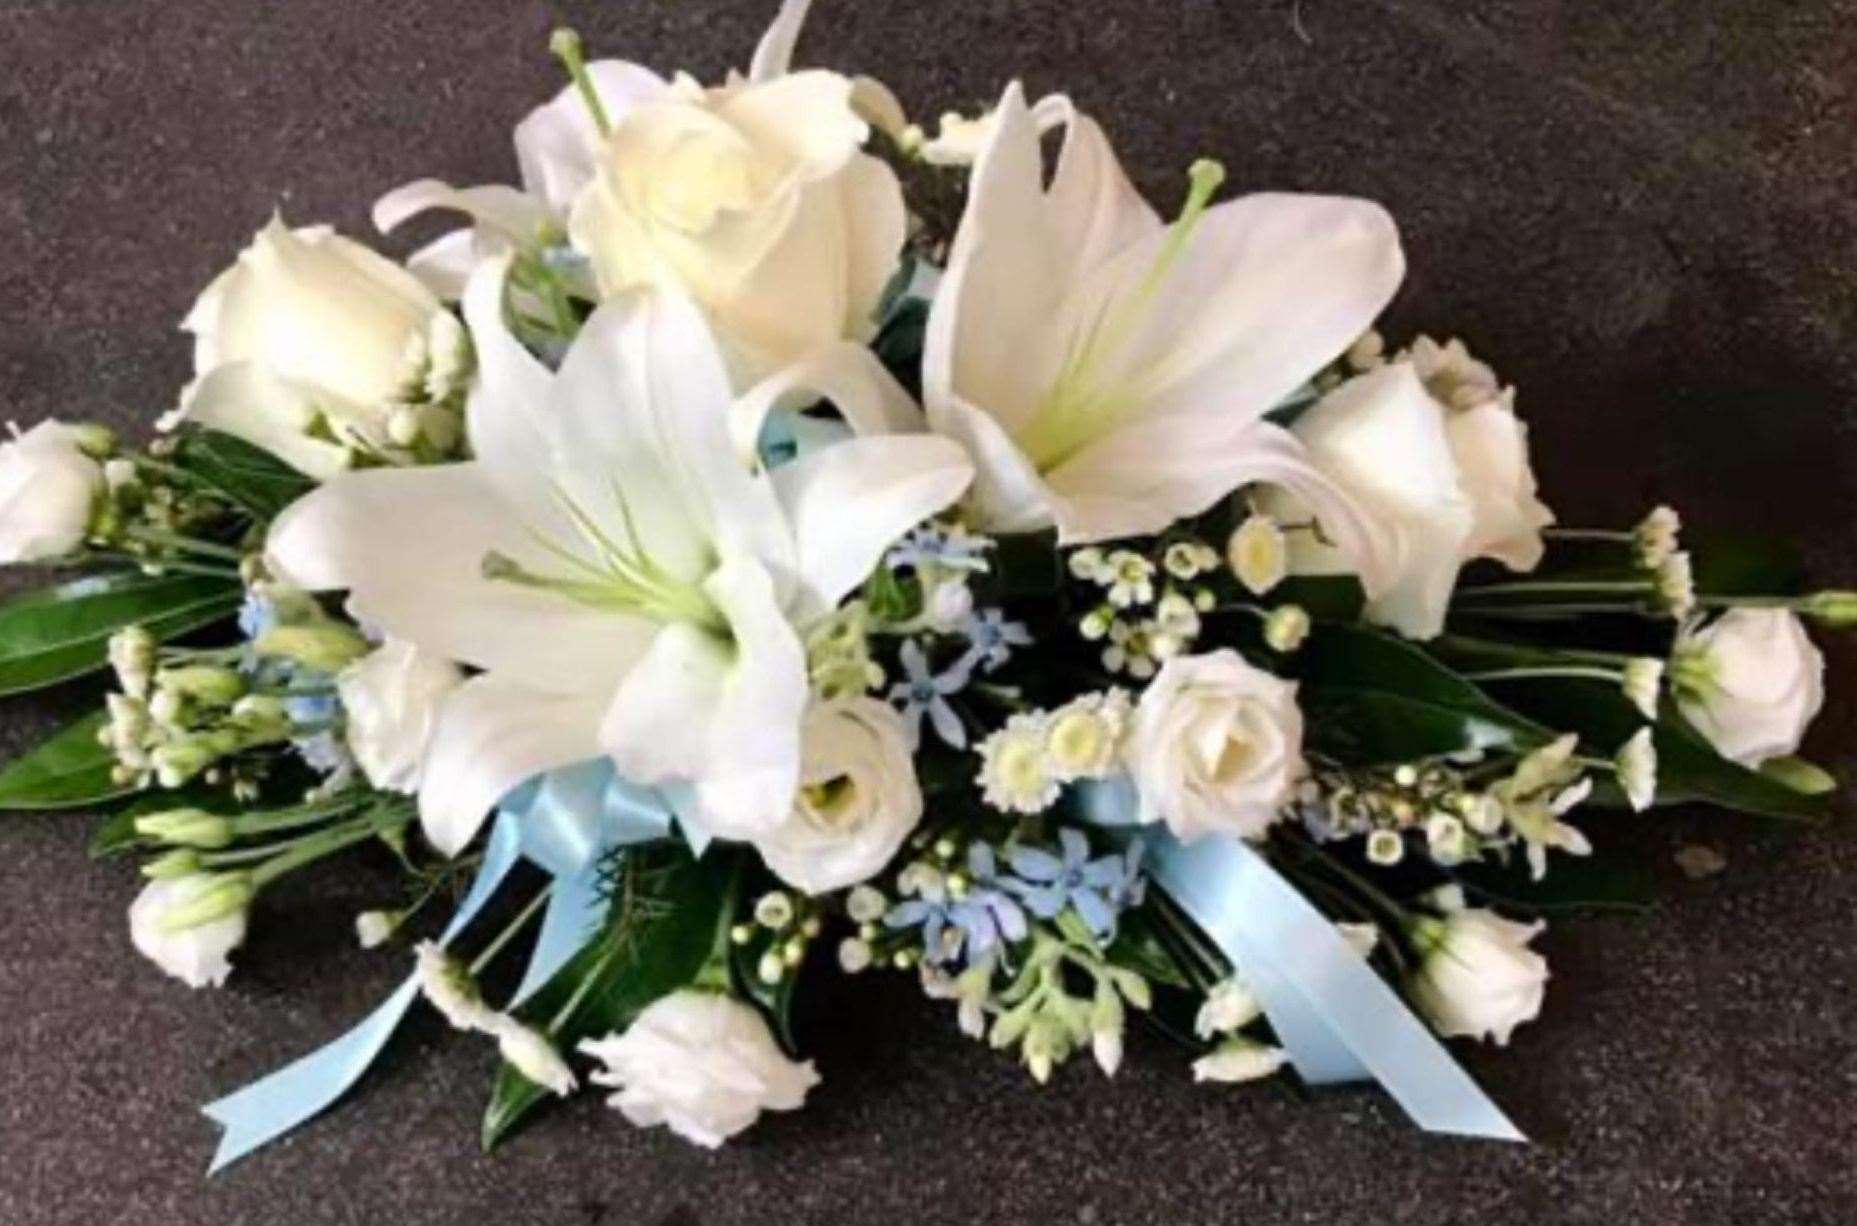 The funeral flowers for Jill Skinner's stillborn boy after her crippling endometriosis masked her pregnancy symptoms. Picture: Jill-Anne Skinner